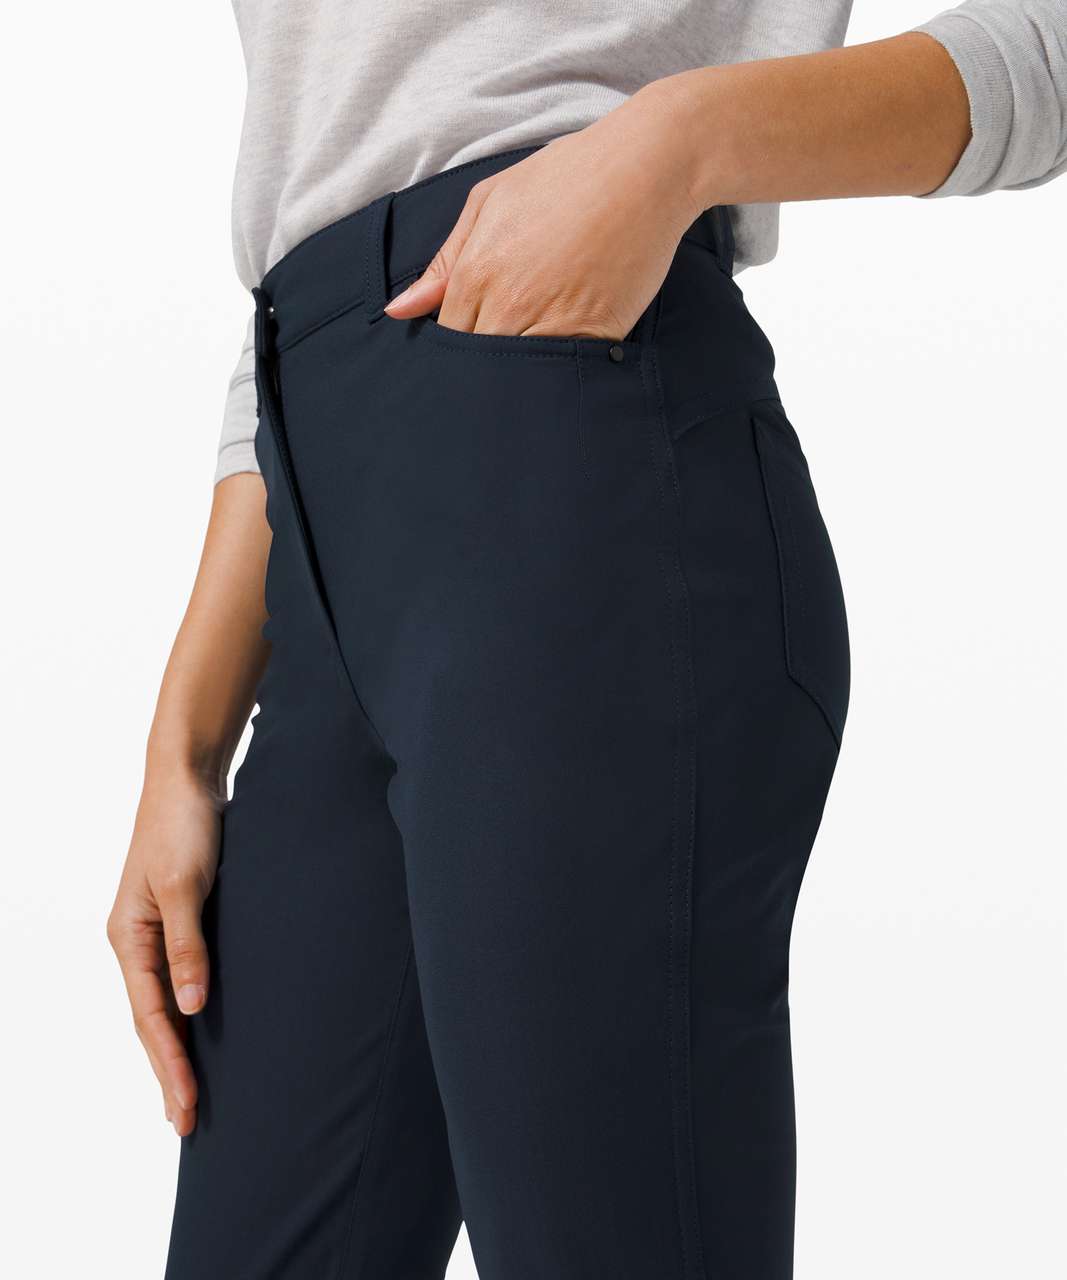 On the Belt Bag and City Sleek 5 Pocket 7/8 Pant- new fav pants!!! :  r/lululemon